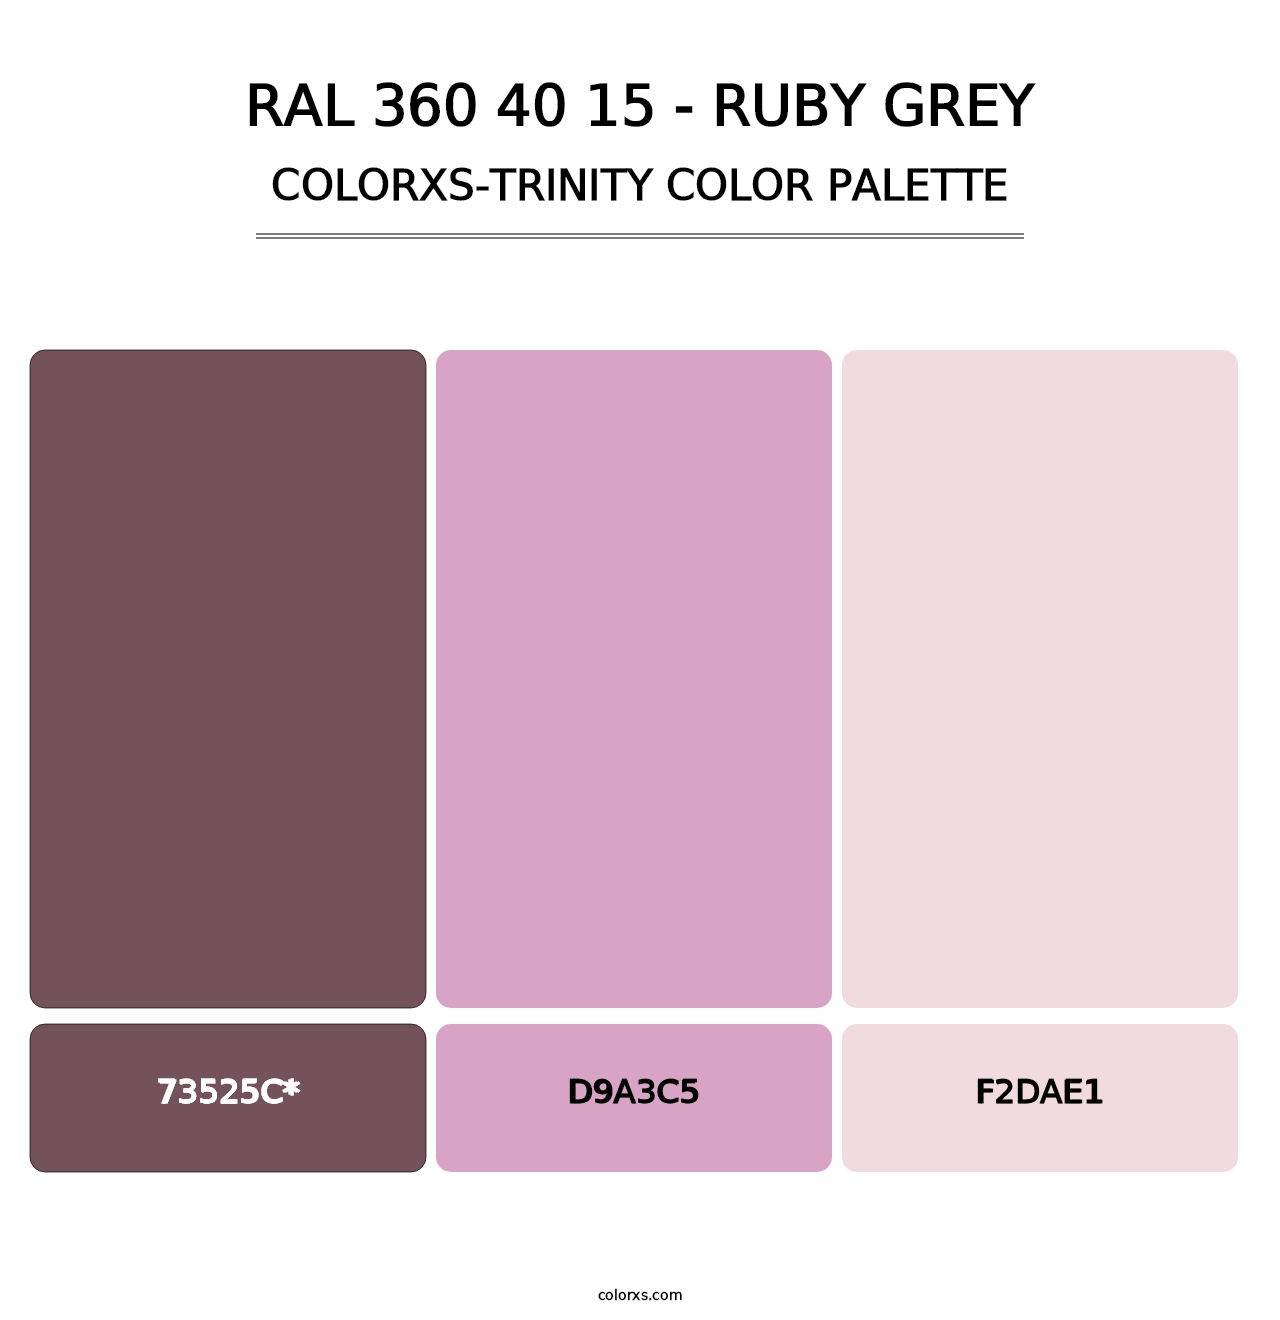 RAL 360 40 15 - Ruby Grey - Colorxs Trinity Palette